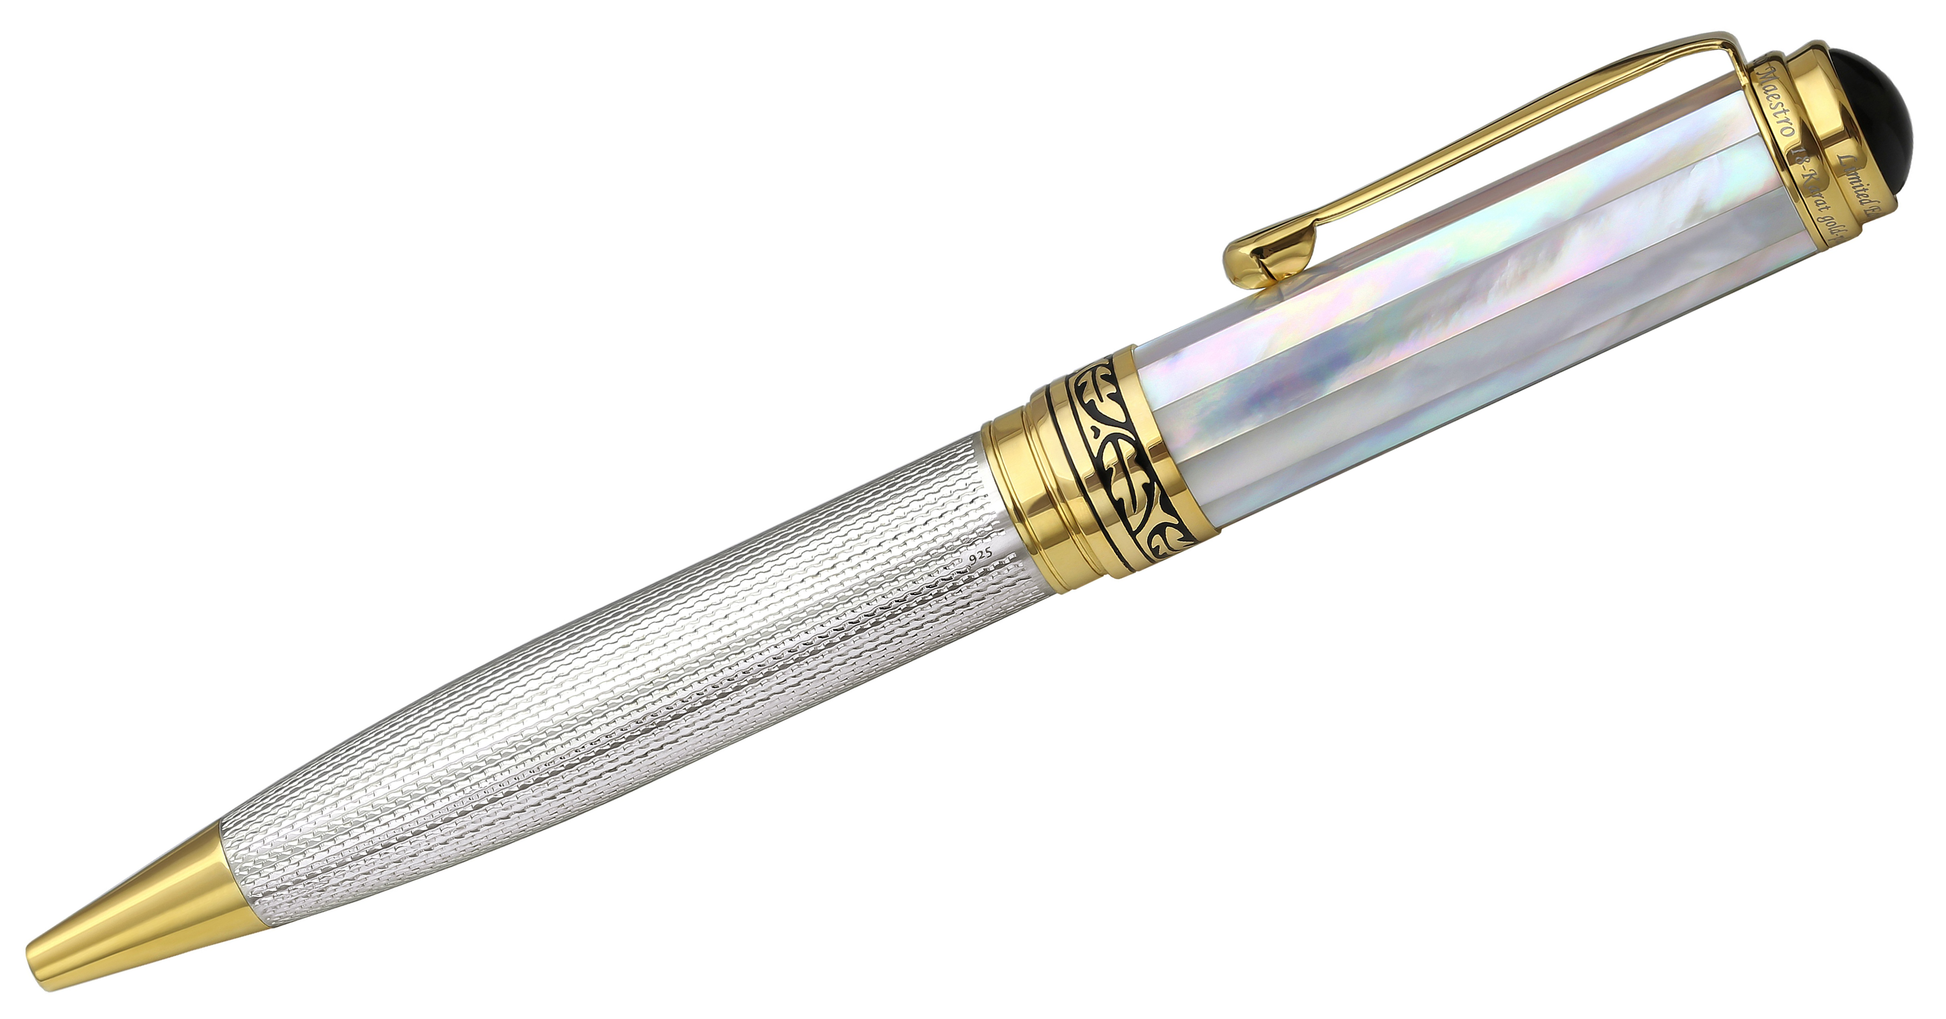 Xezo - Side view of the Maestro White MOP B ballpoint pen